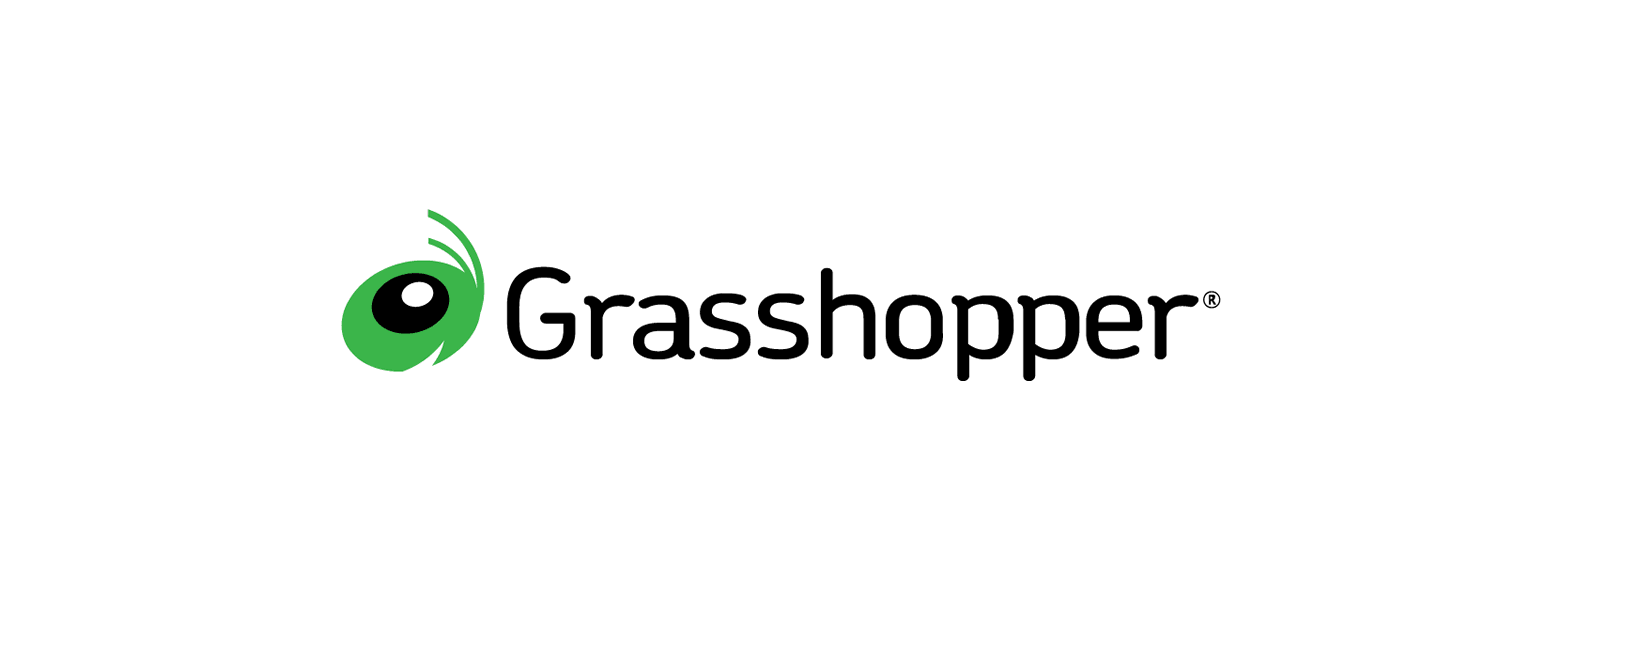 Grasshopper Discount Code 2022